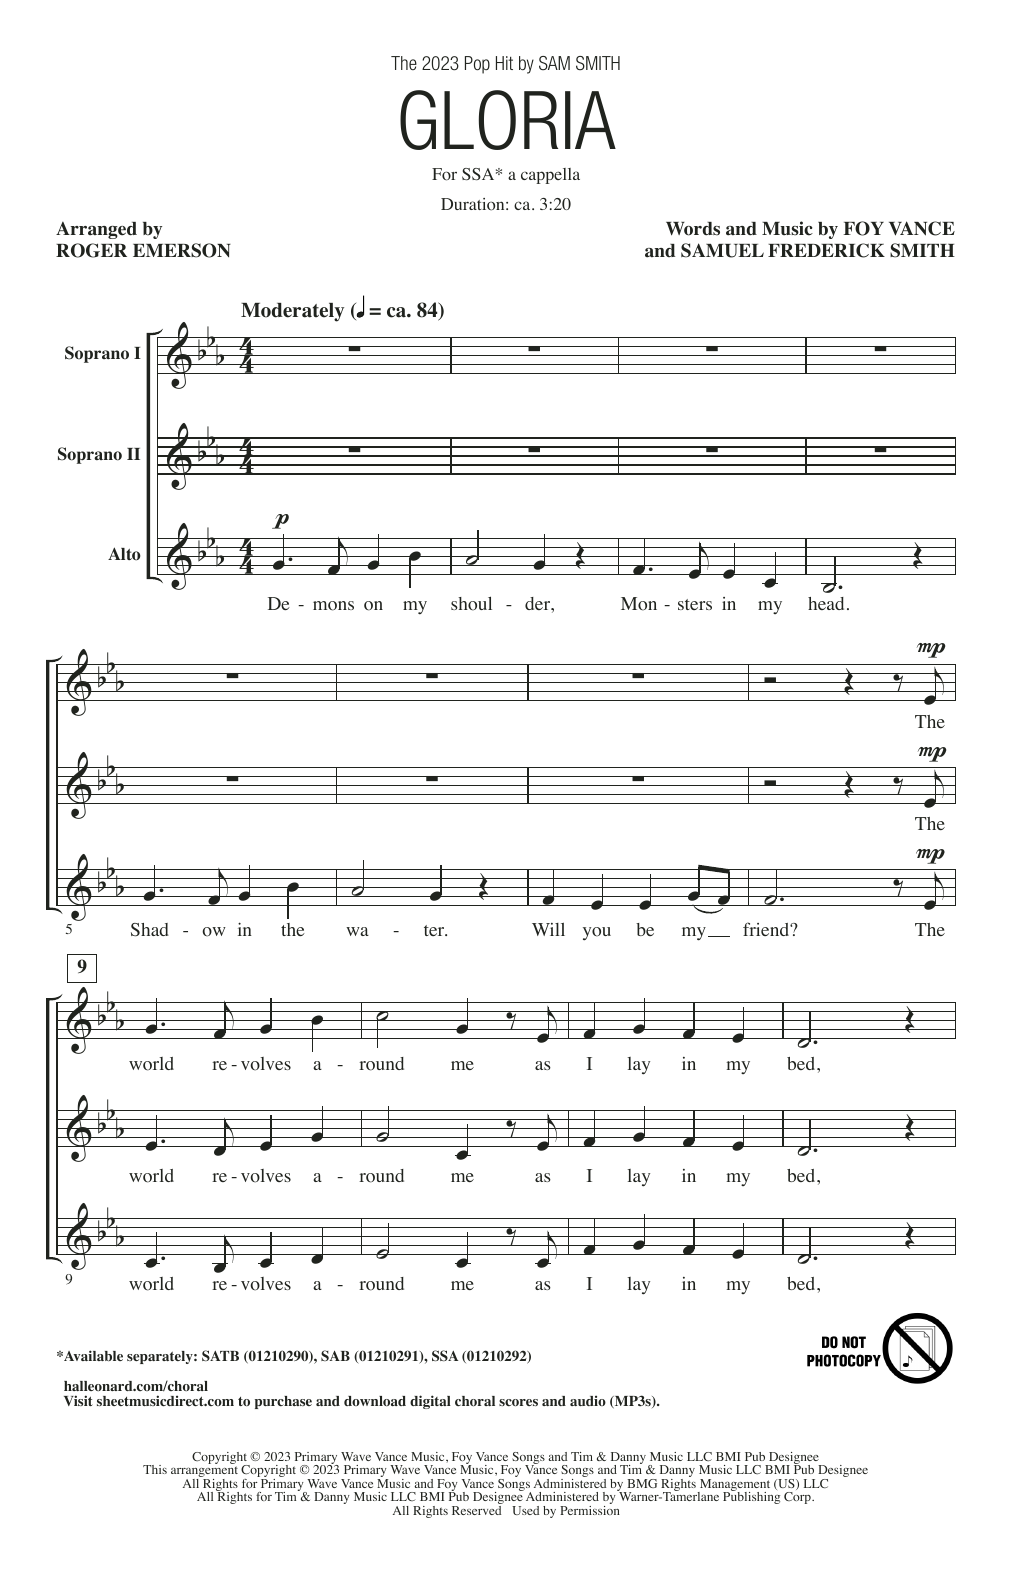 Sam Smith Gloria (arr. Roger Emerson) Sheet Music Notes & Chords for SAB Choir - Download or Print PDF